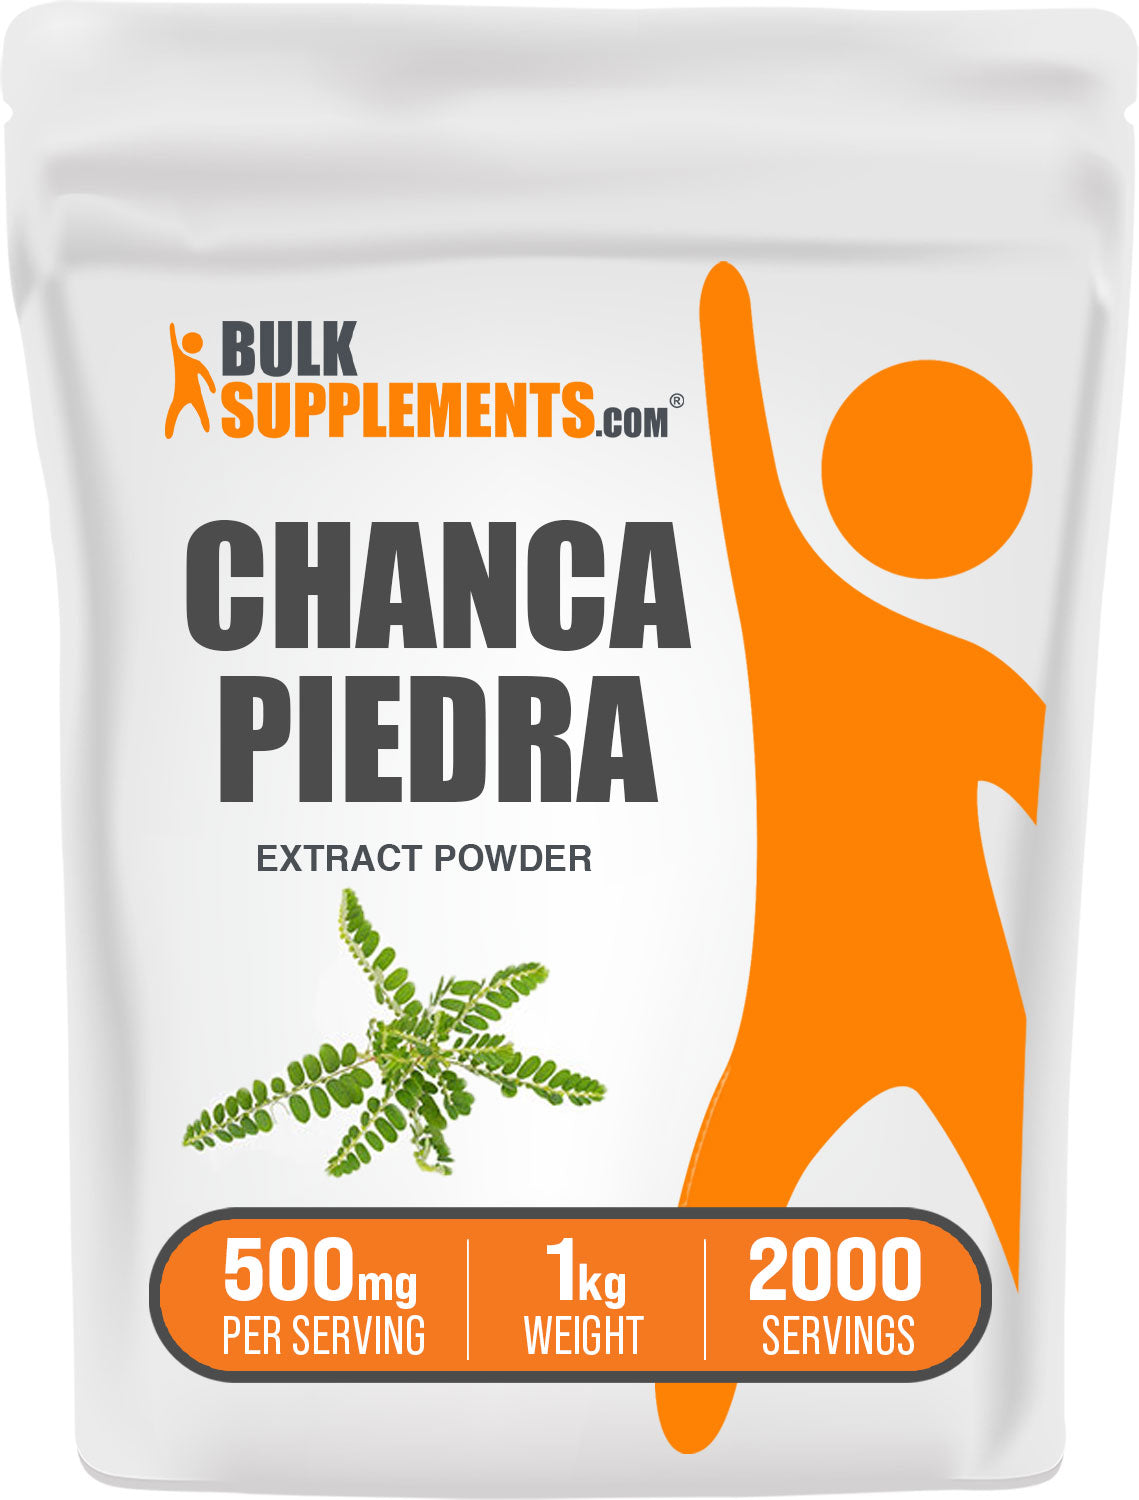 1kg of chanca piedra